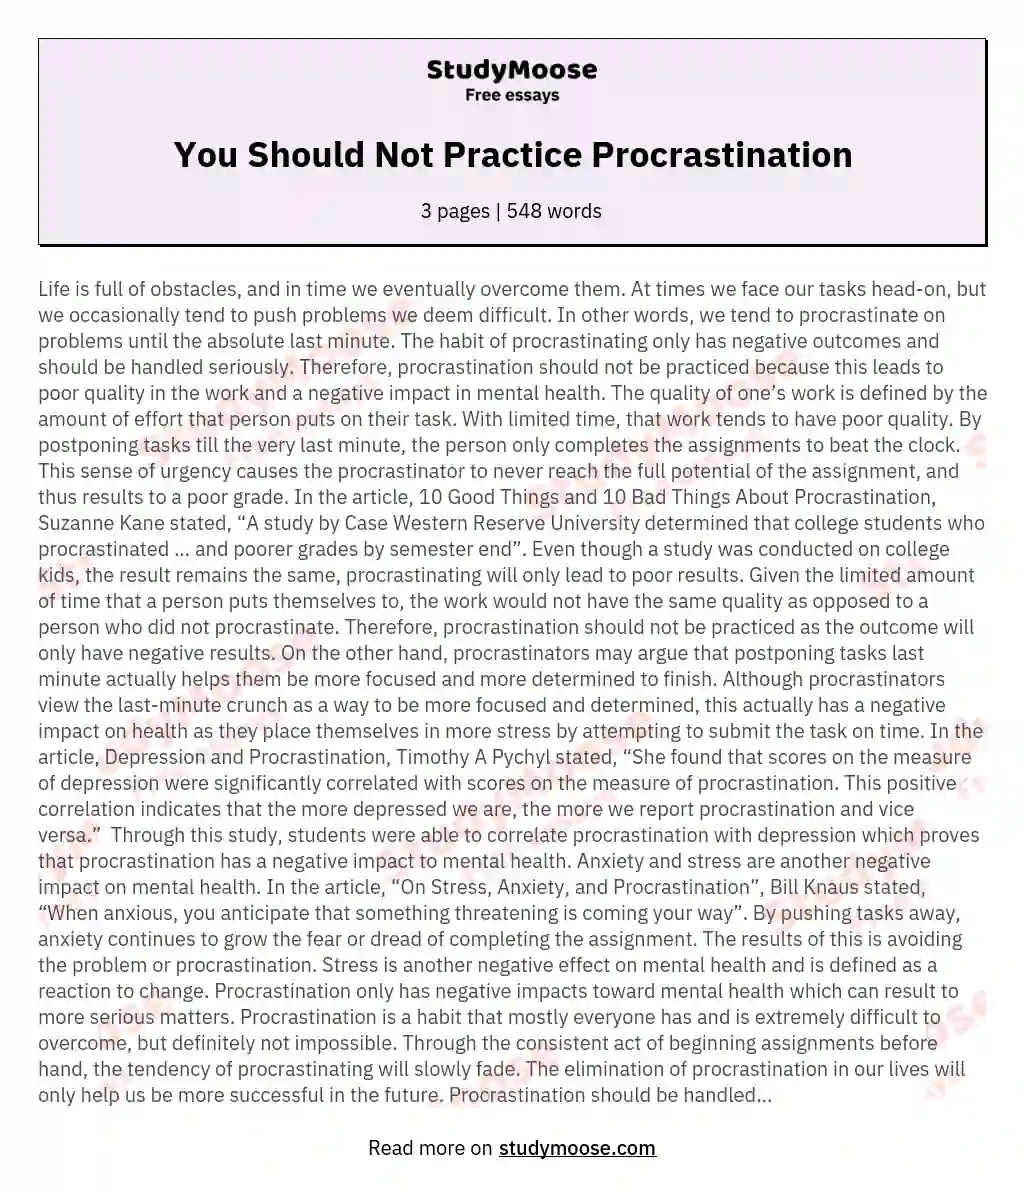 You Should Not Practice Procrastination essay